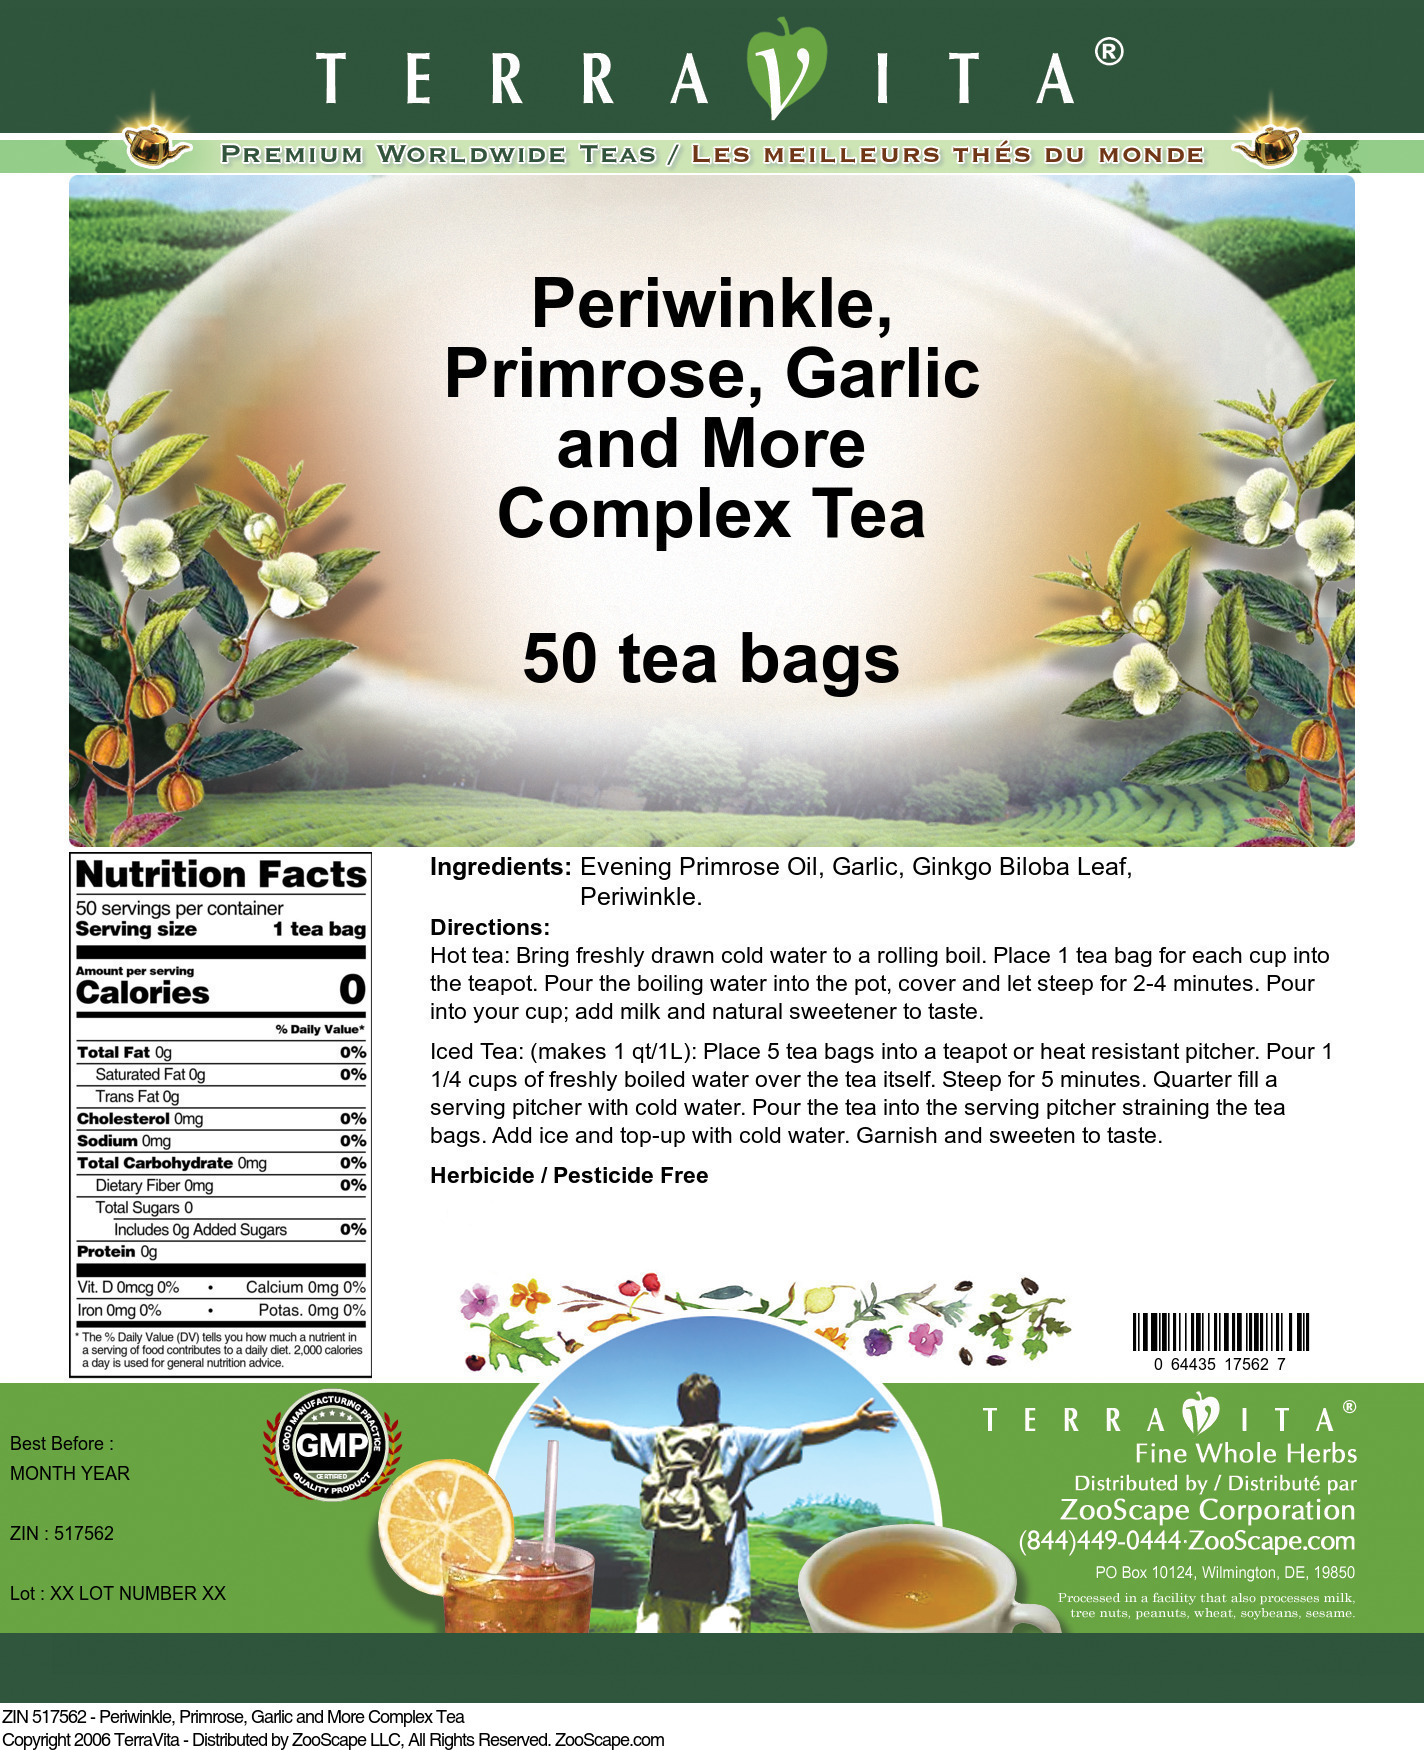 Periwinkle, Primrose, Garlic and More Complex Tea - Label